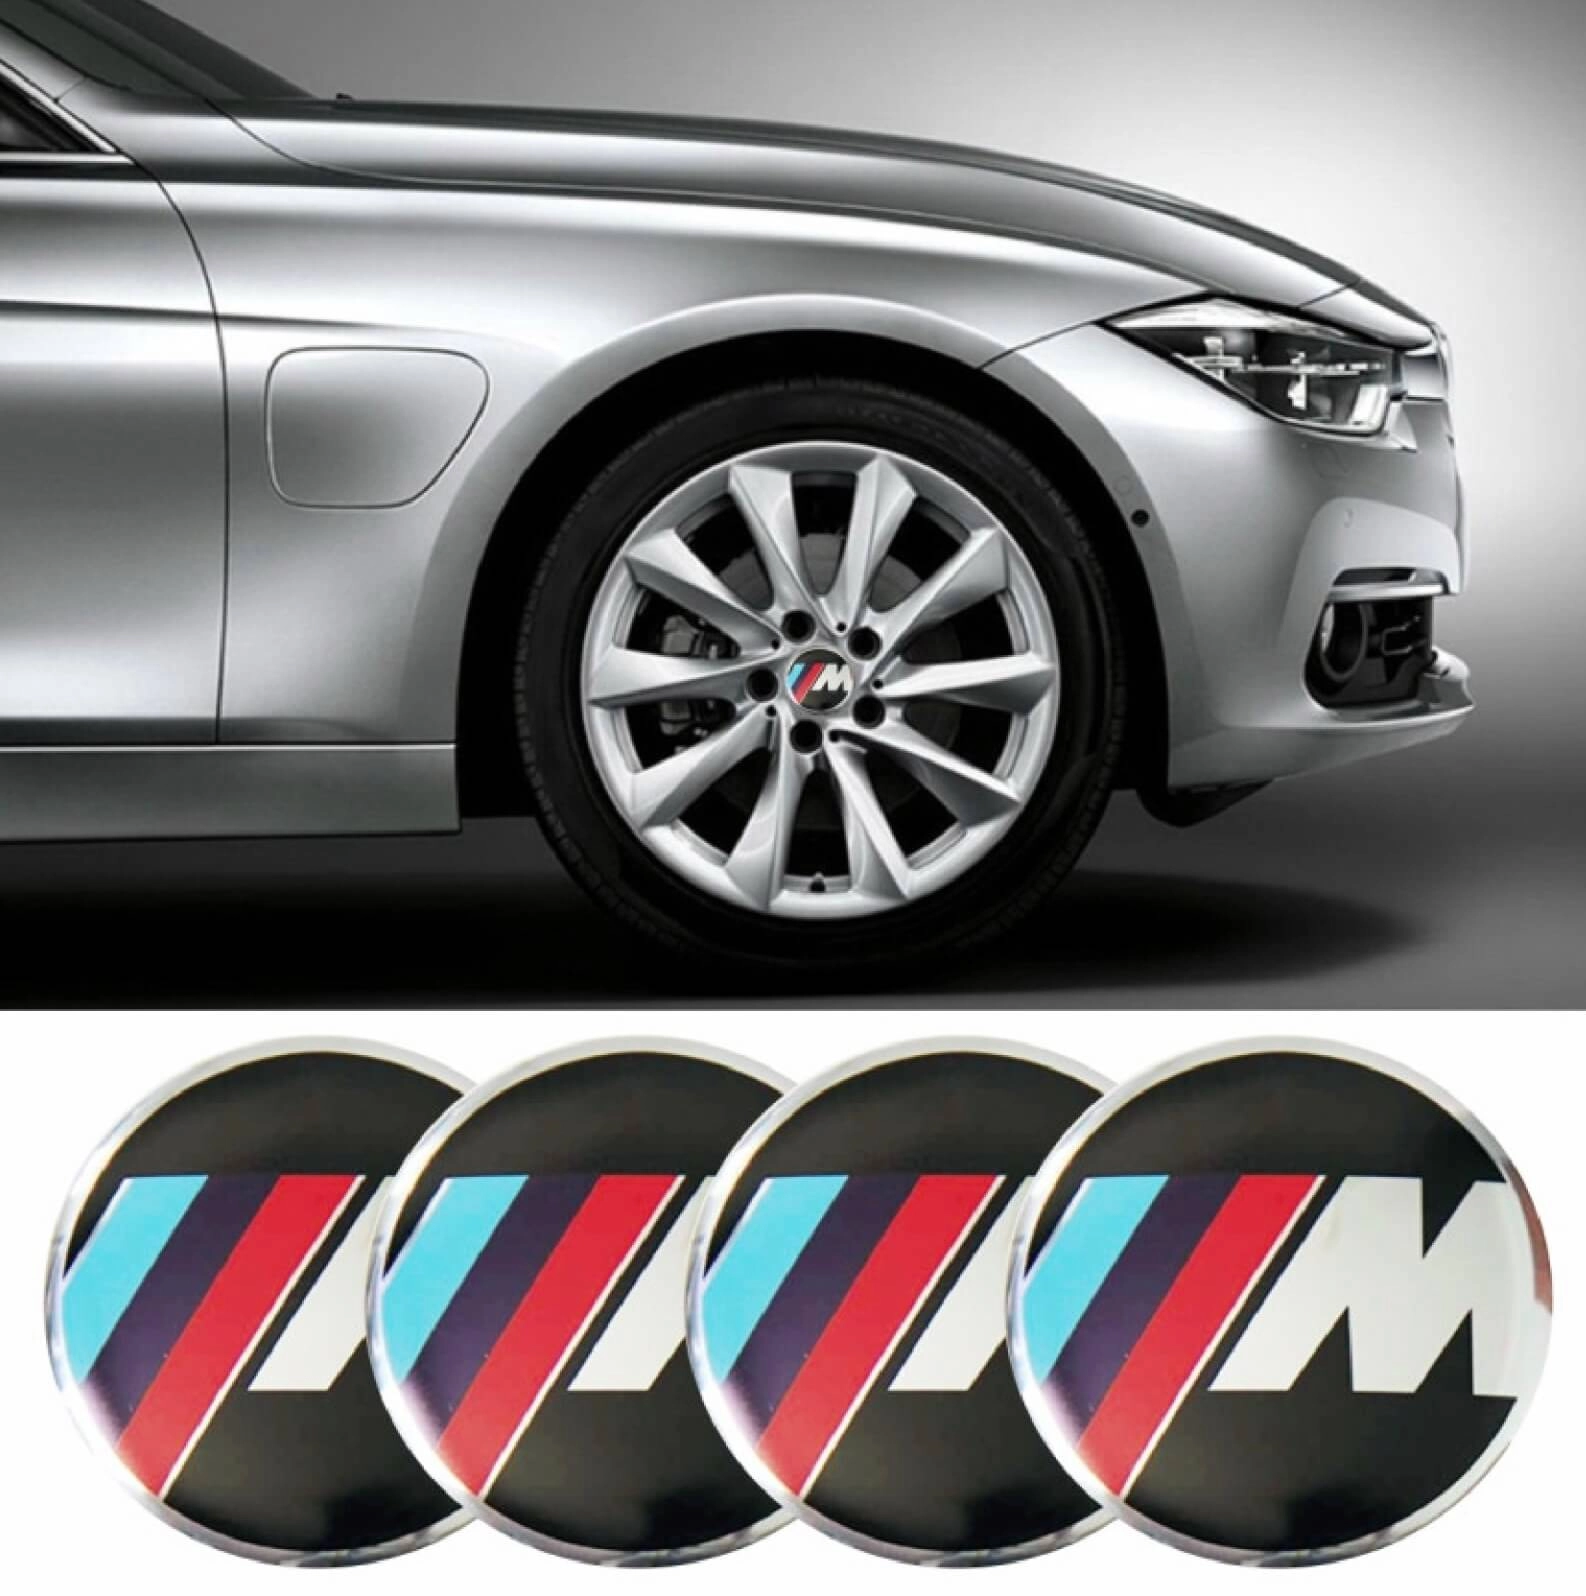 BMW M Power felni matrica szett - 56 mm-es, 3D kivitel